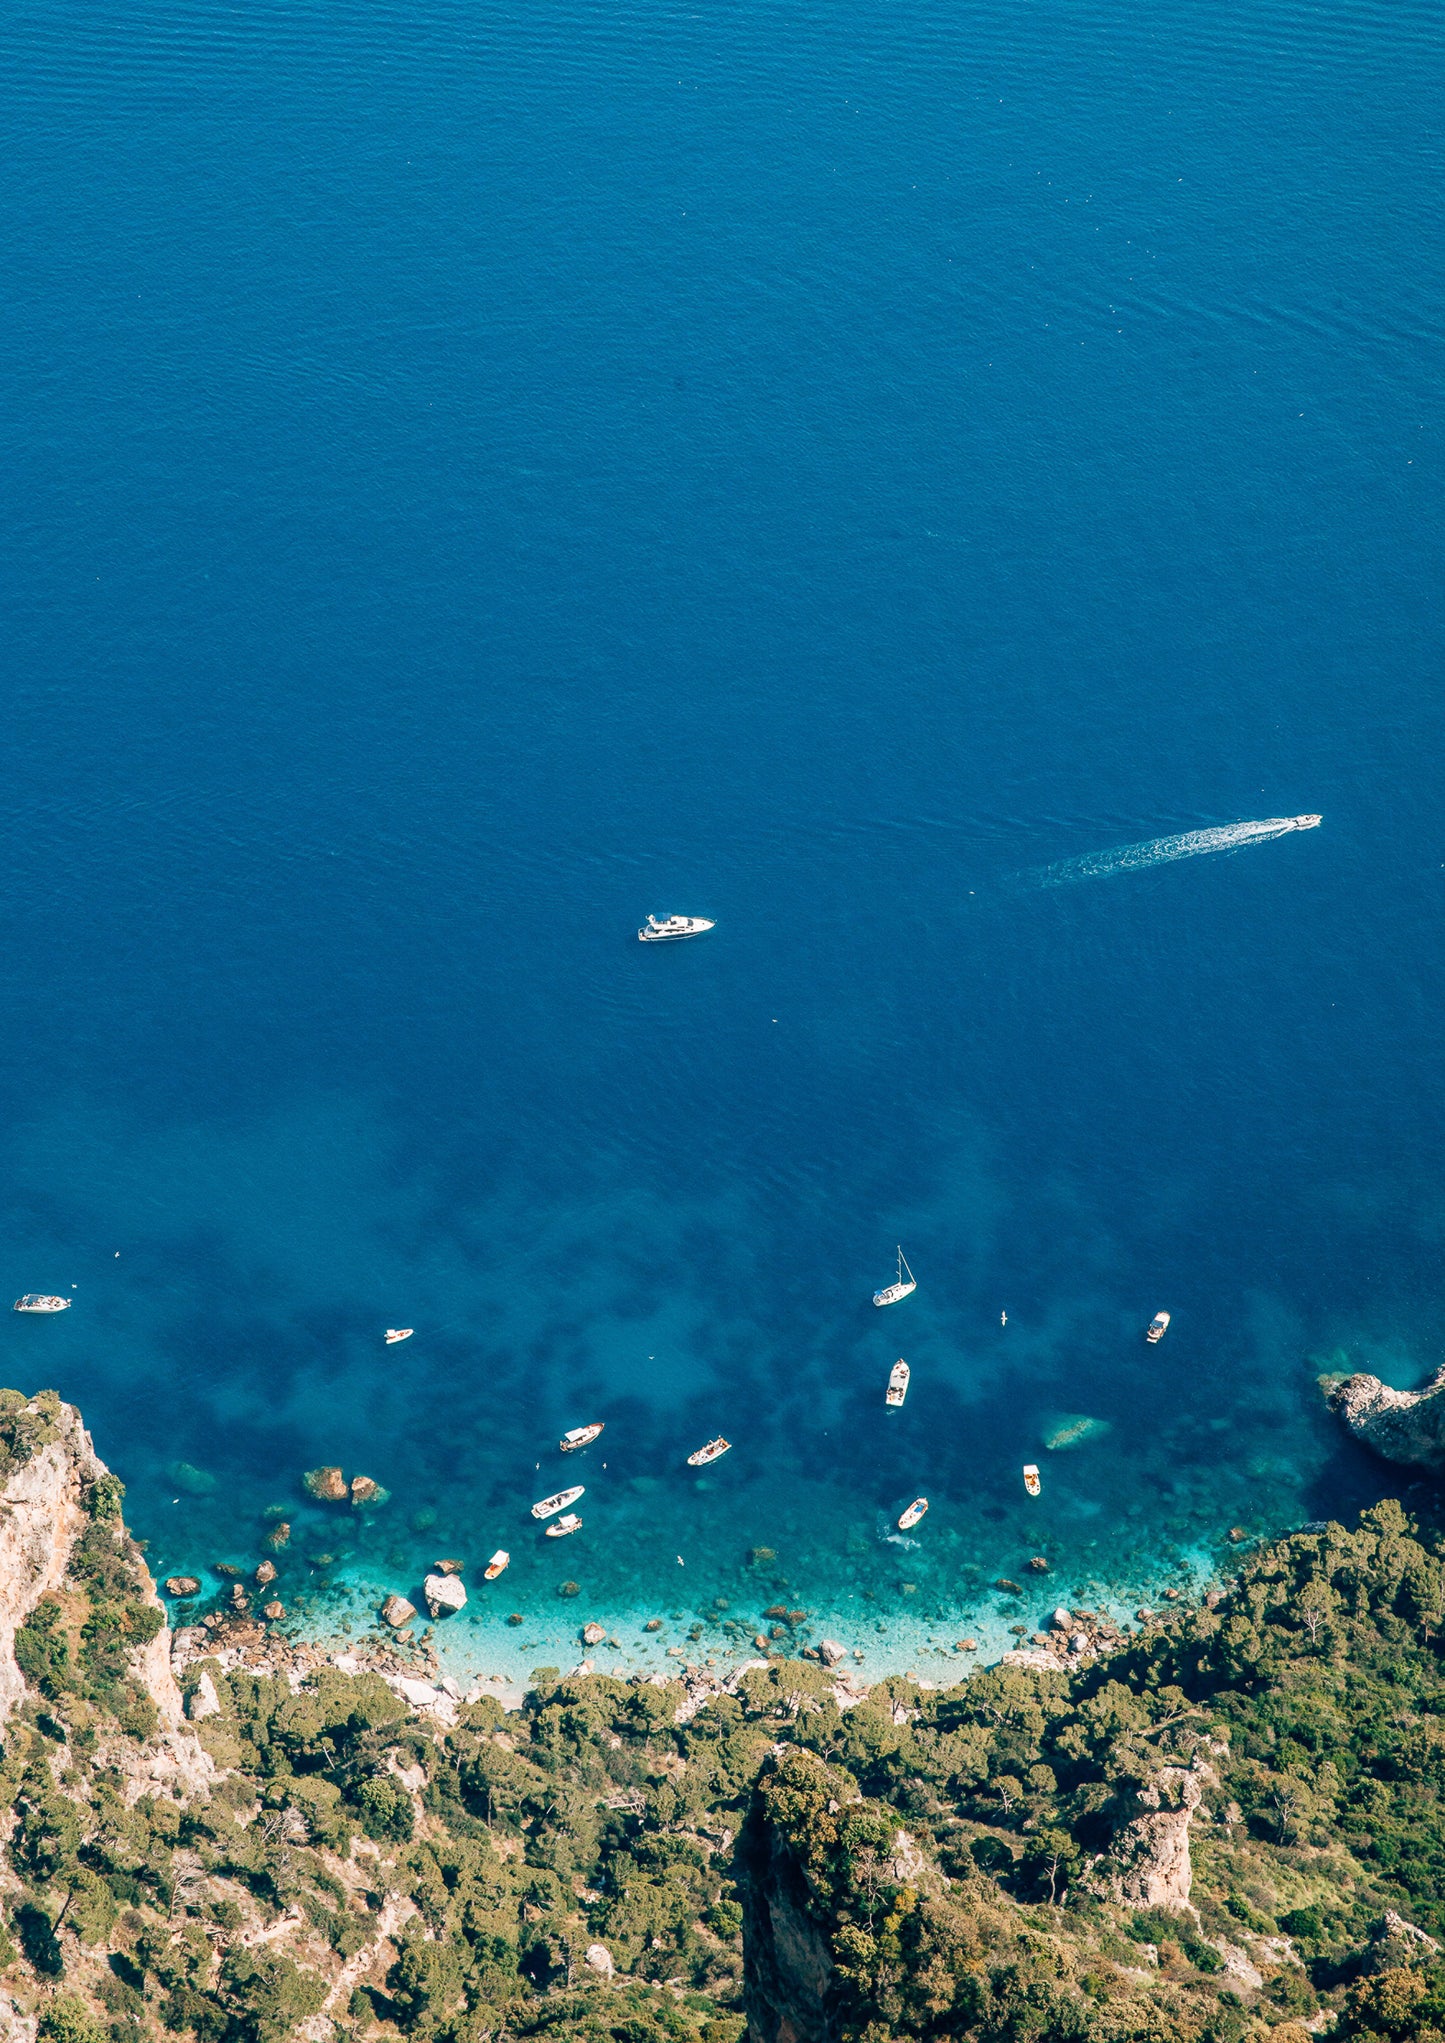 Aerial View of Capri II, Italy